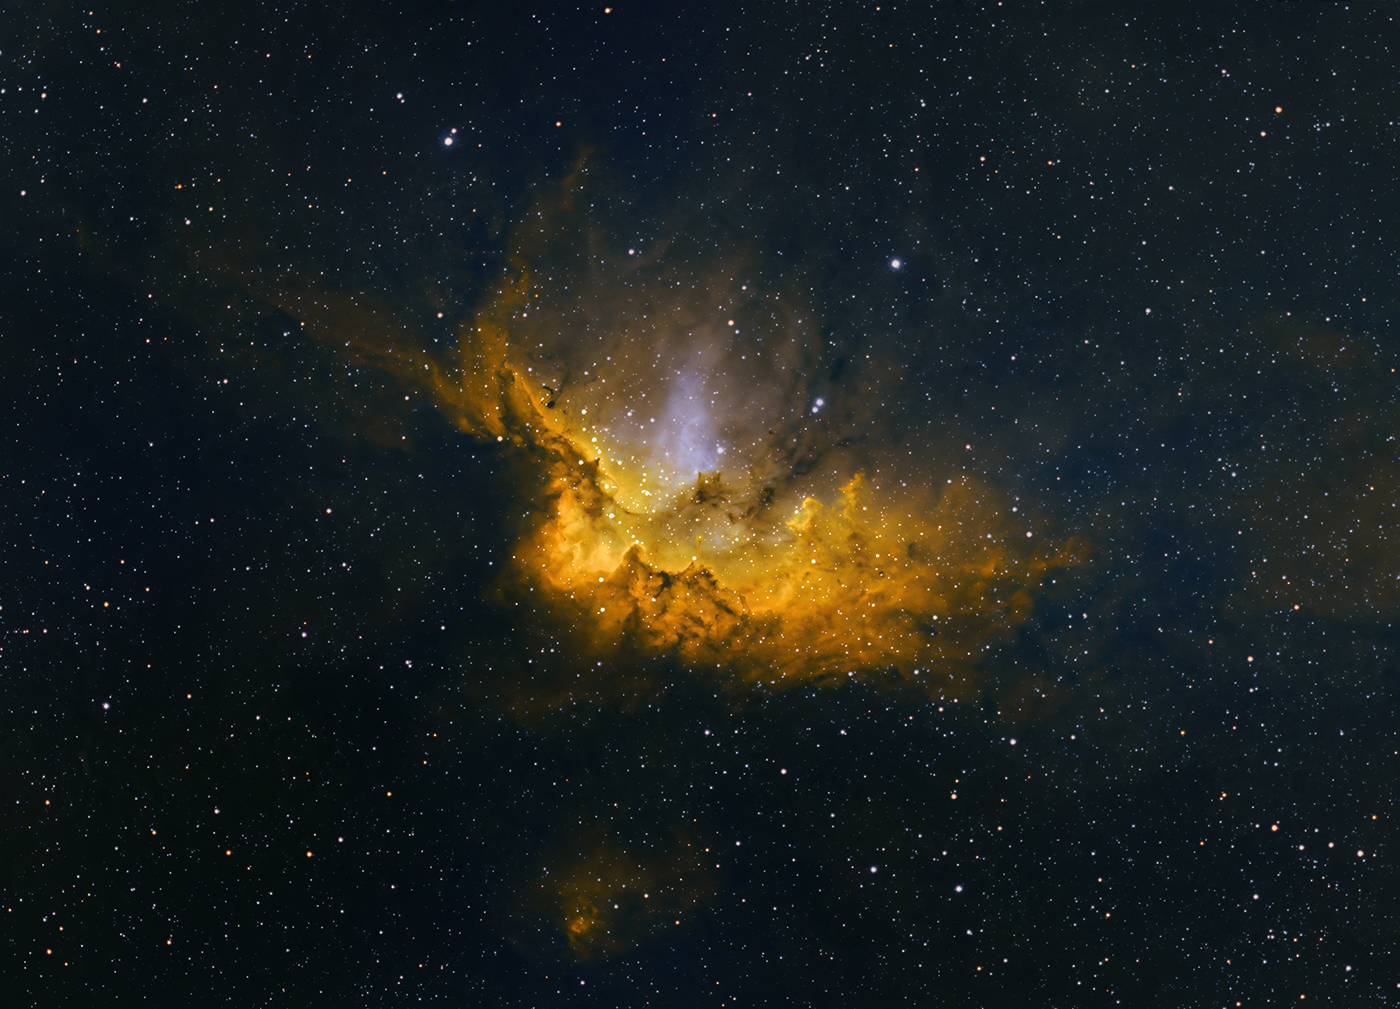 Wizard Nebula - NGC 7380